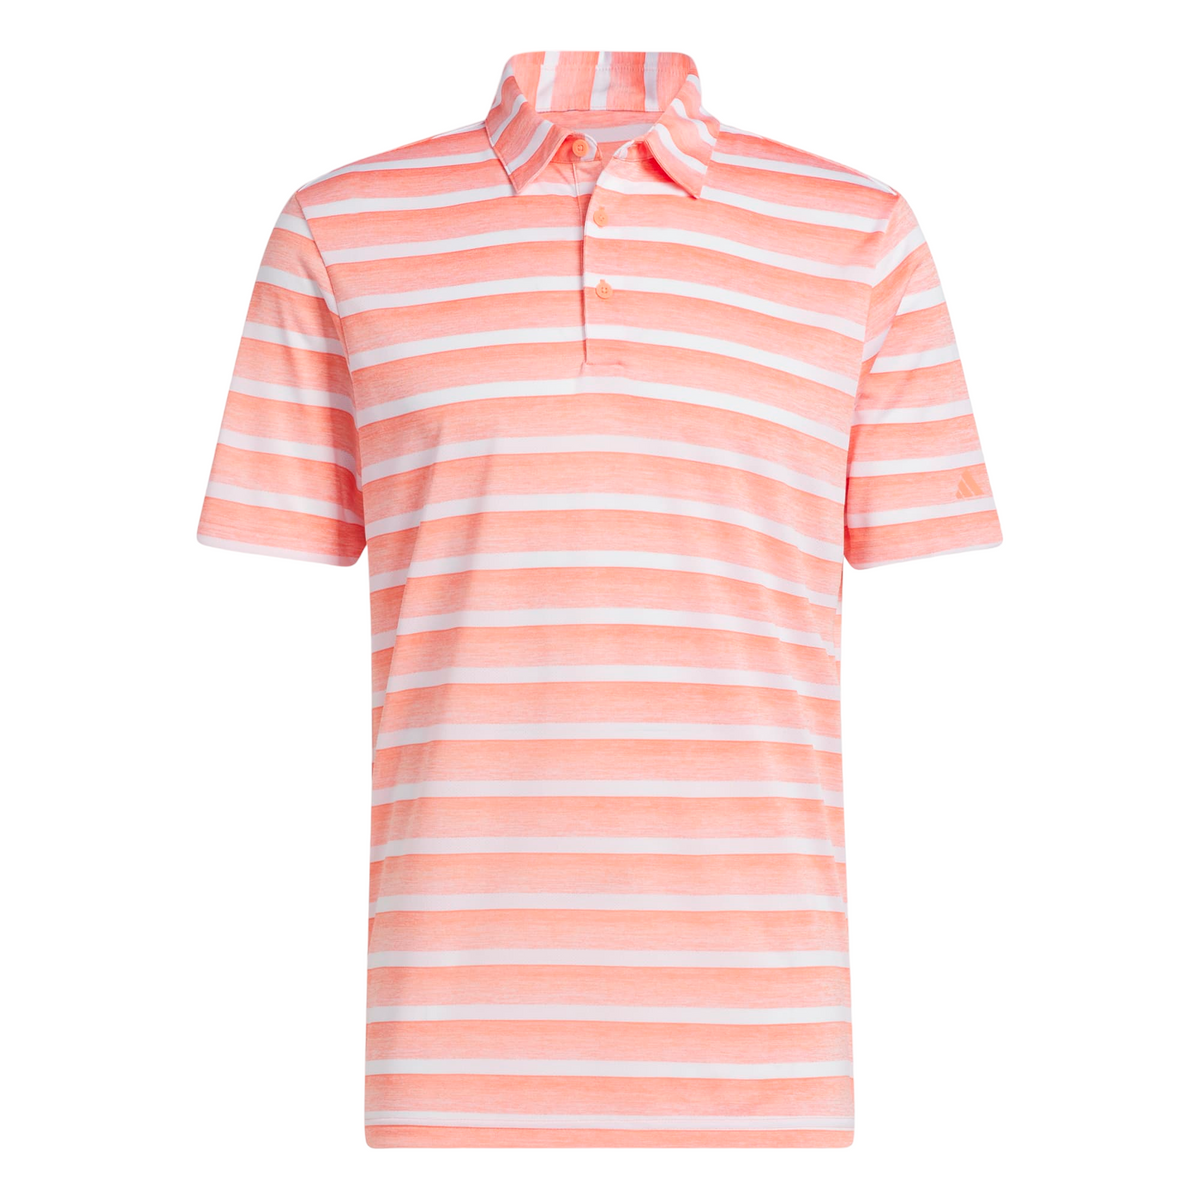 Adidas Two-Color Striped Polo Shirt - Mens